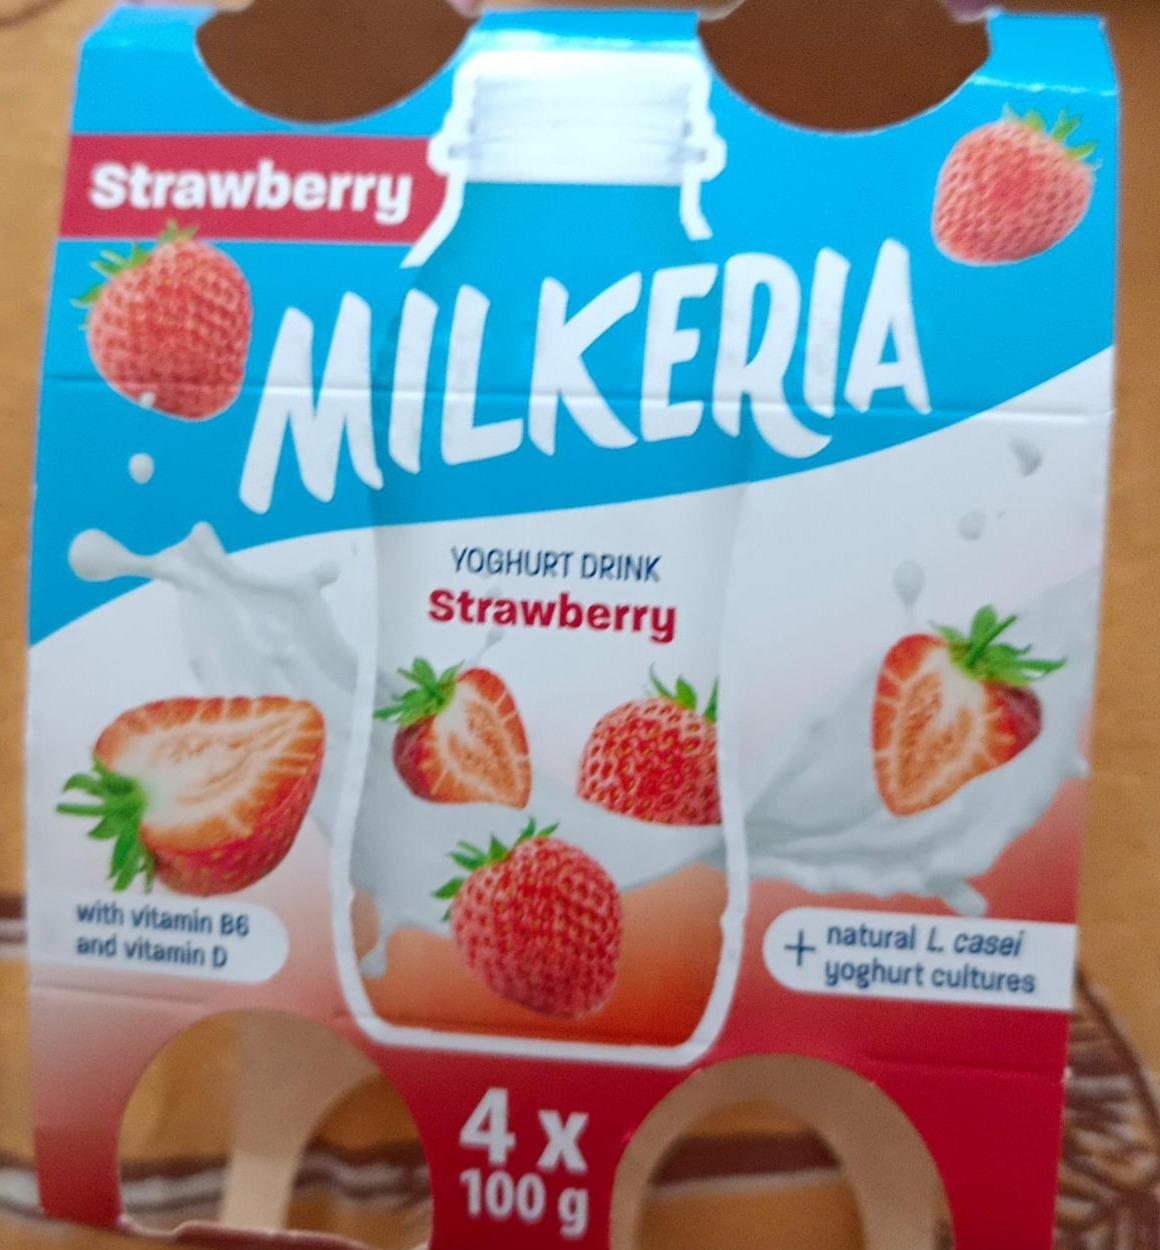 Képek - Yoghurt drink Strawberry Milkeria